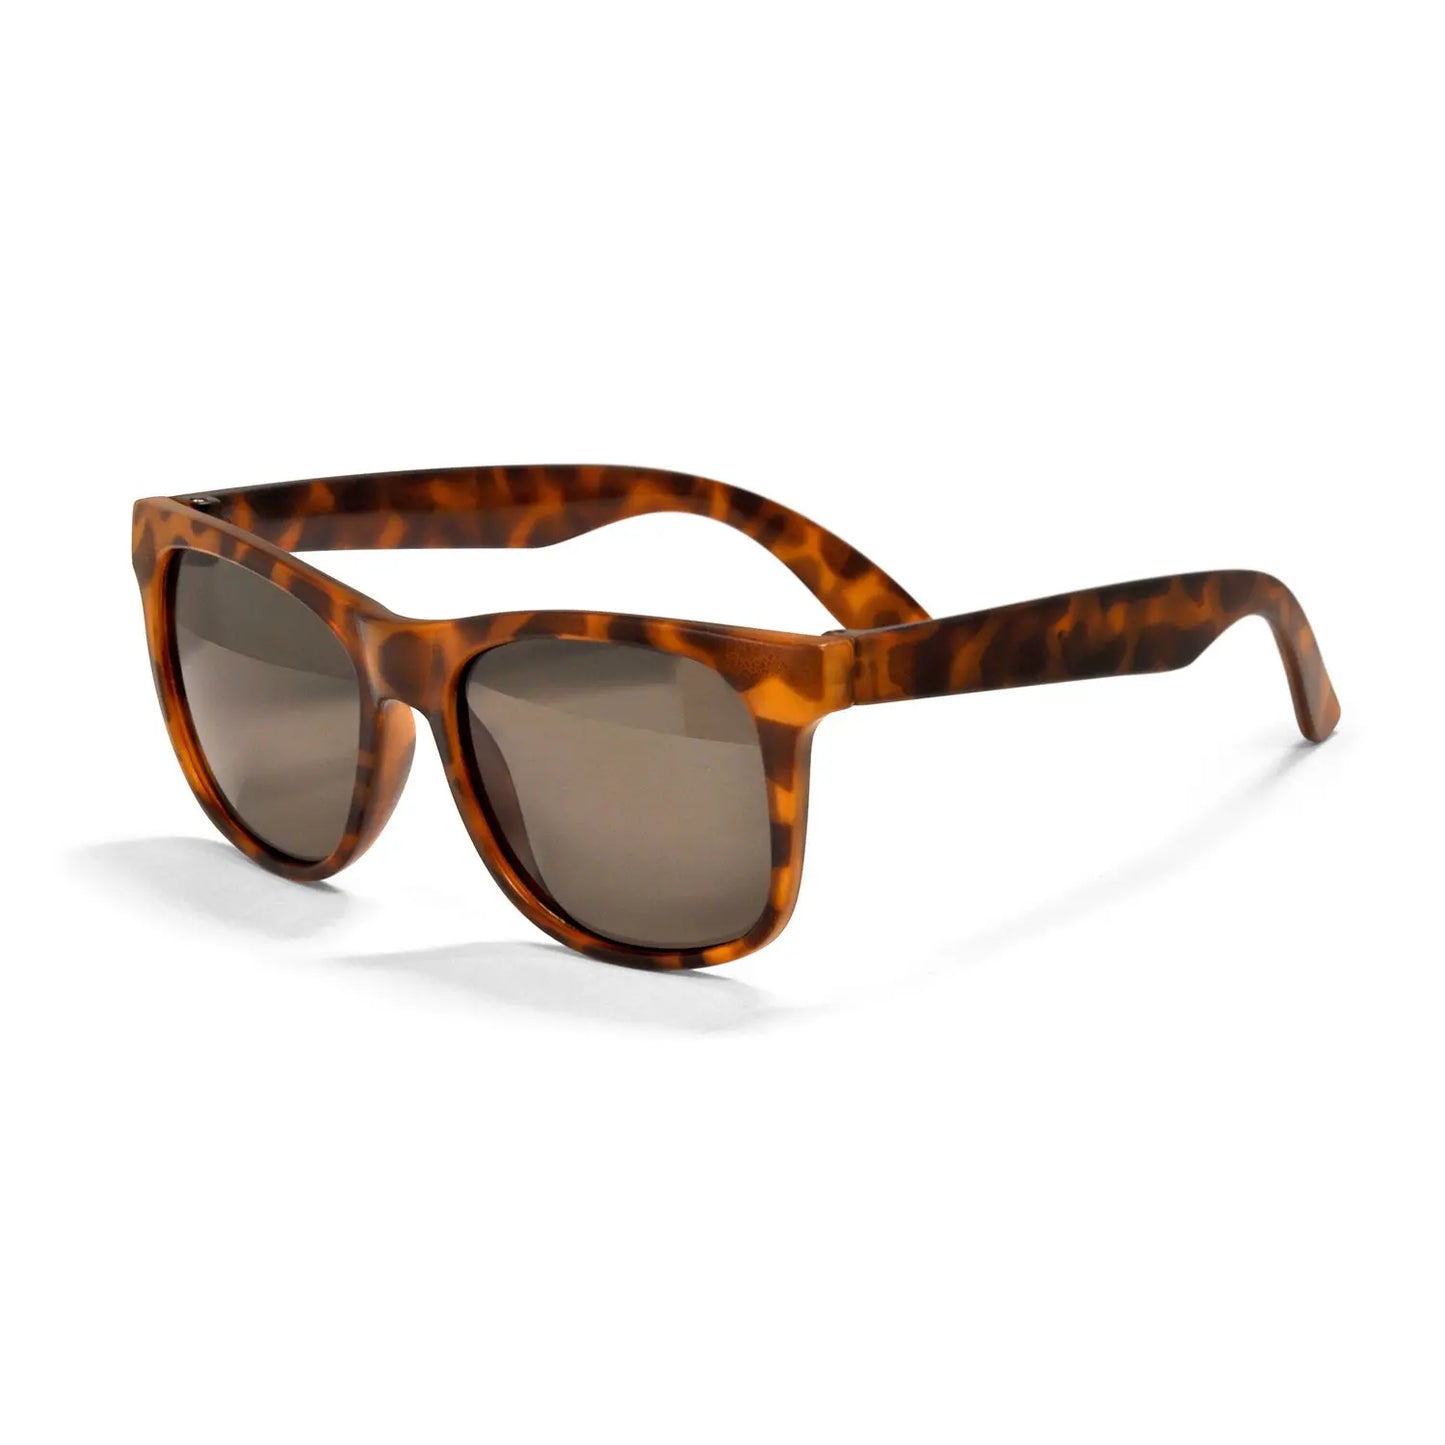 Surf Sunglasses - Cheetah